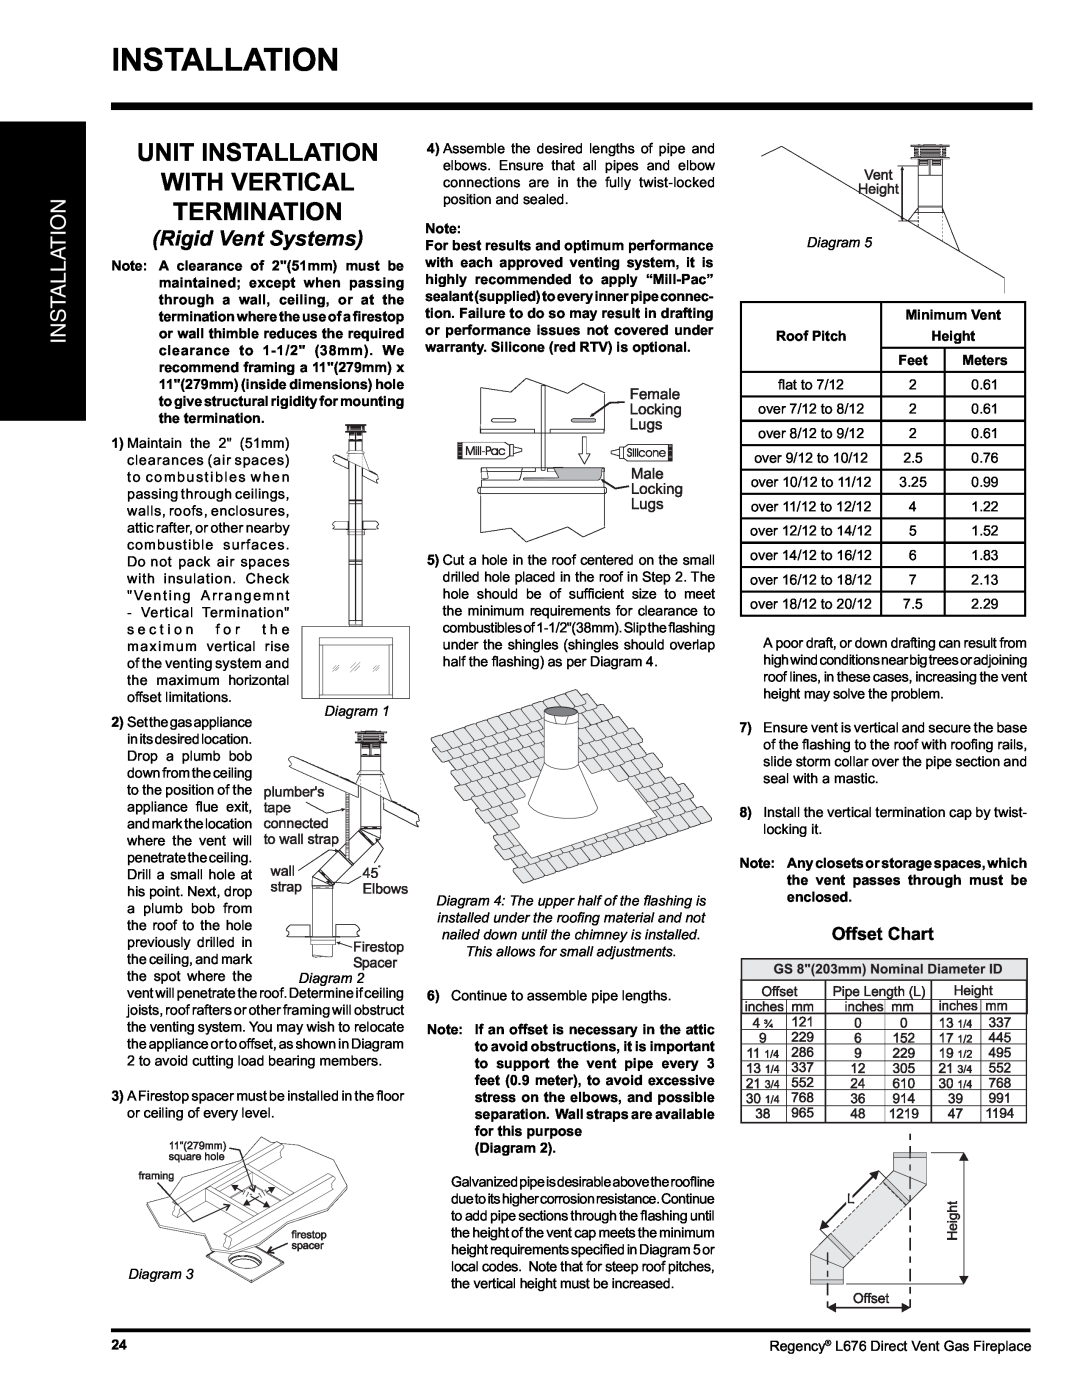 Regency L676 installation manual Unit Installation With Vertical Termination, Rigid Vent Systems, Diagram 